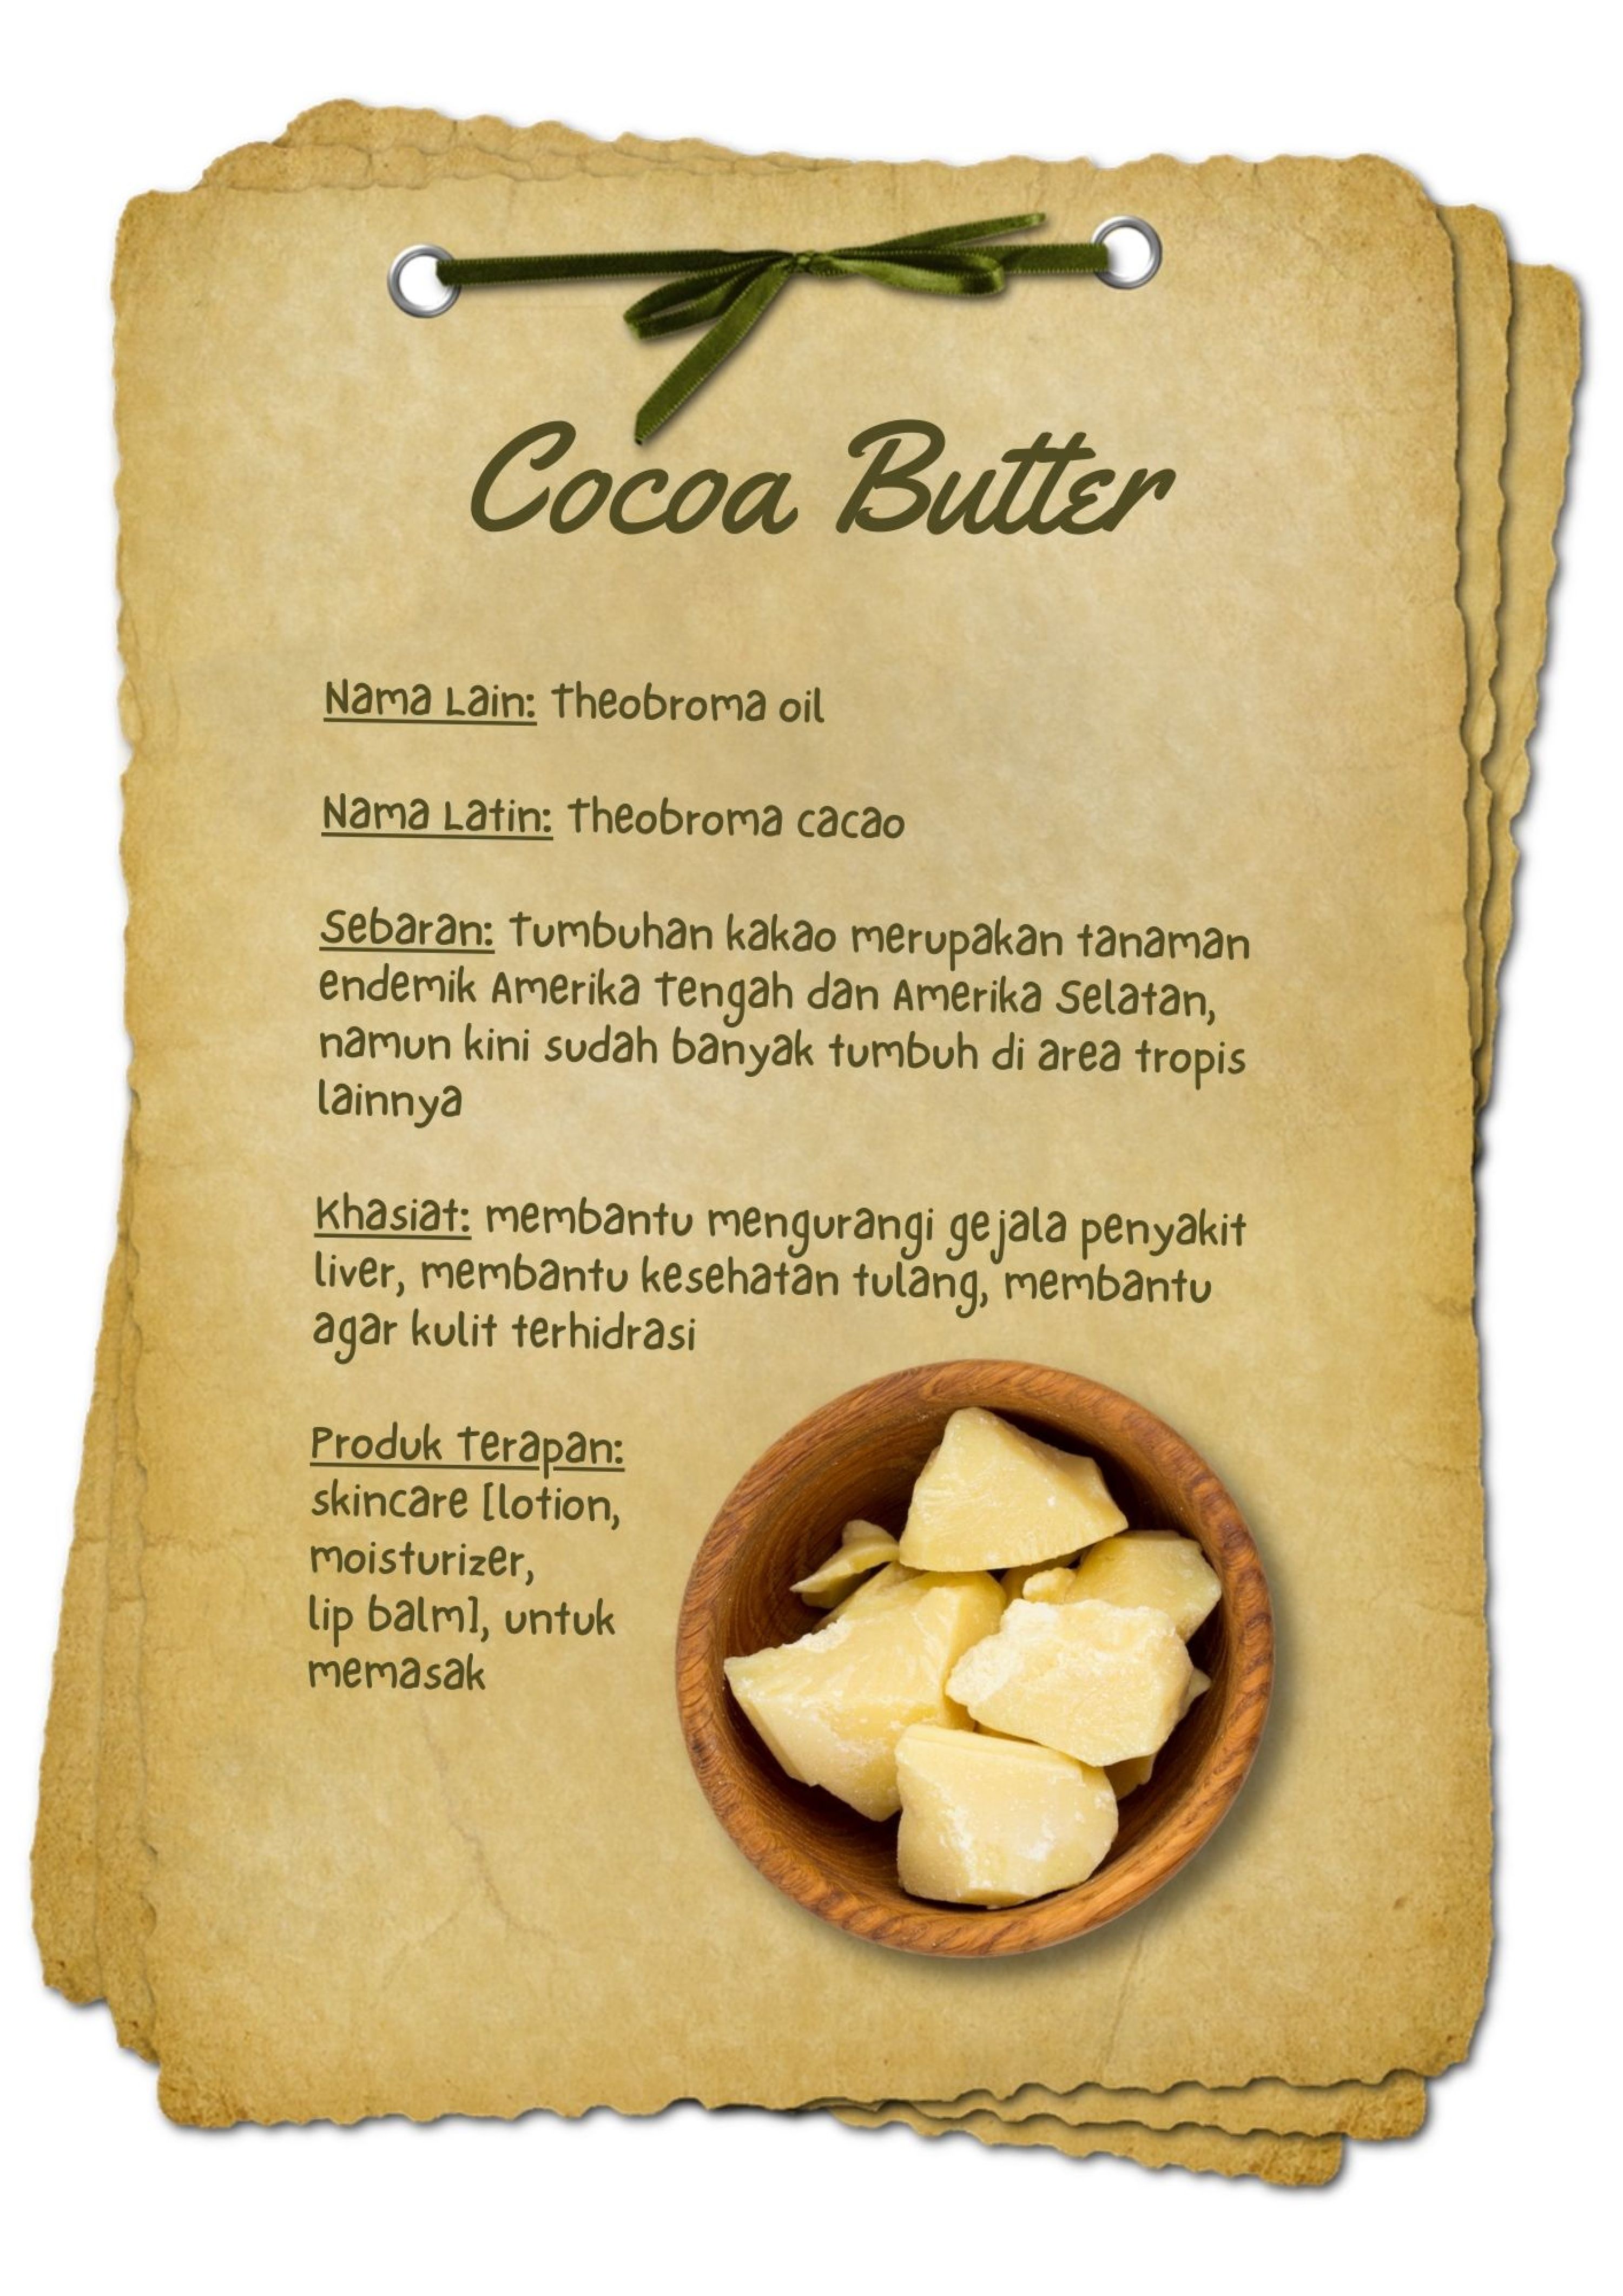 BAHAN AKTIF Cocoa Butter.jpg